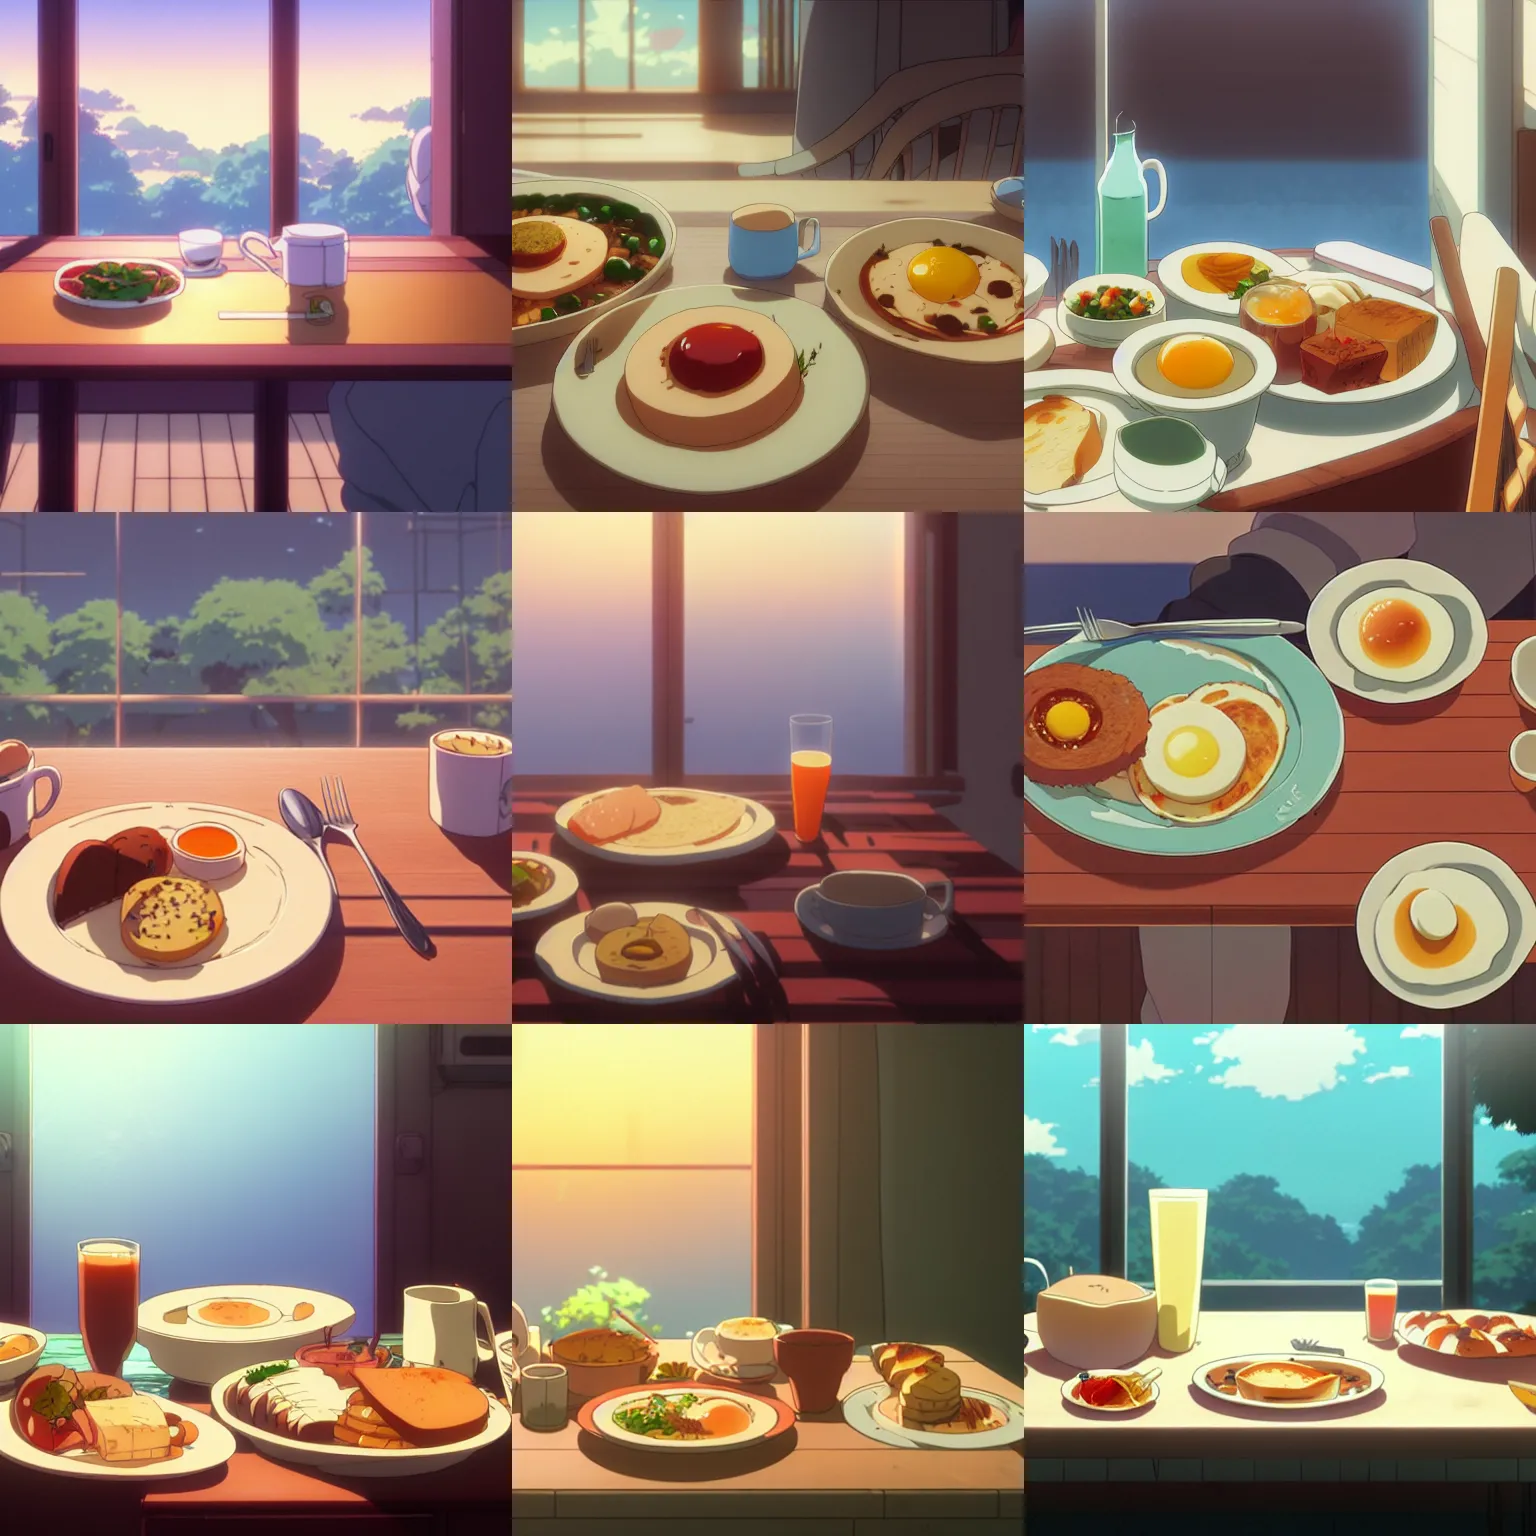 Prompt: hearty breakfast, no people, a close - up, digital art, illustrations, by makoto shinkai and studio ghibli